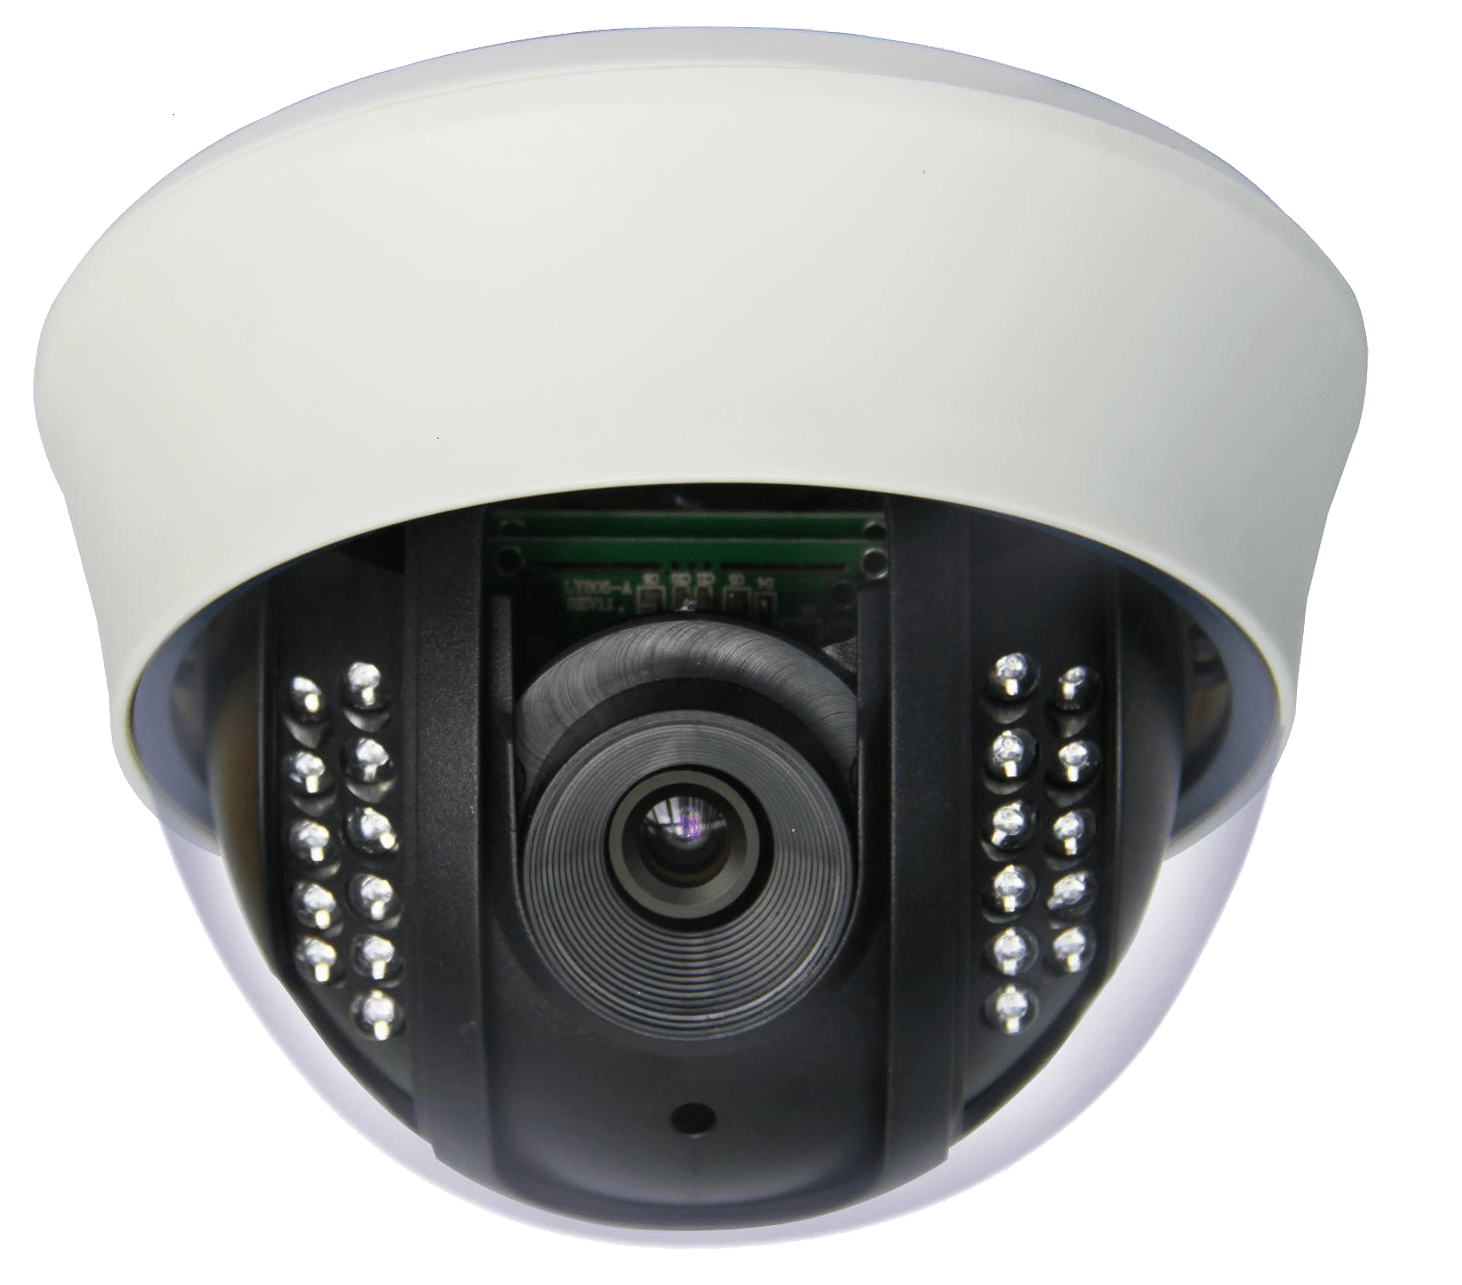 CCTV Camera PNG High Quality Image